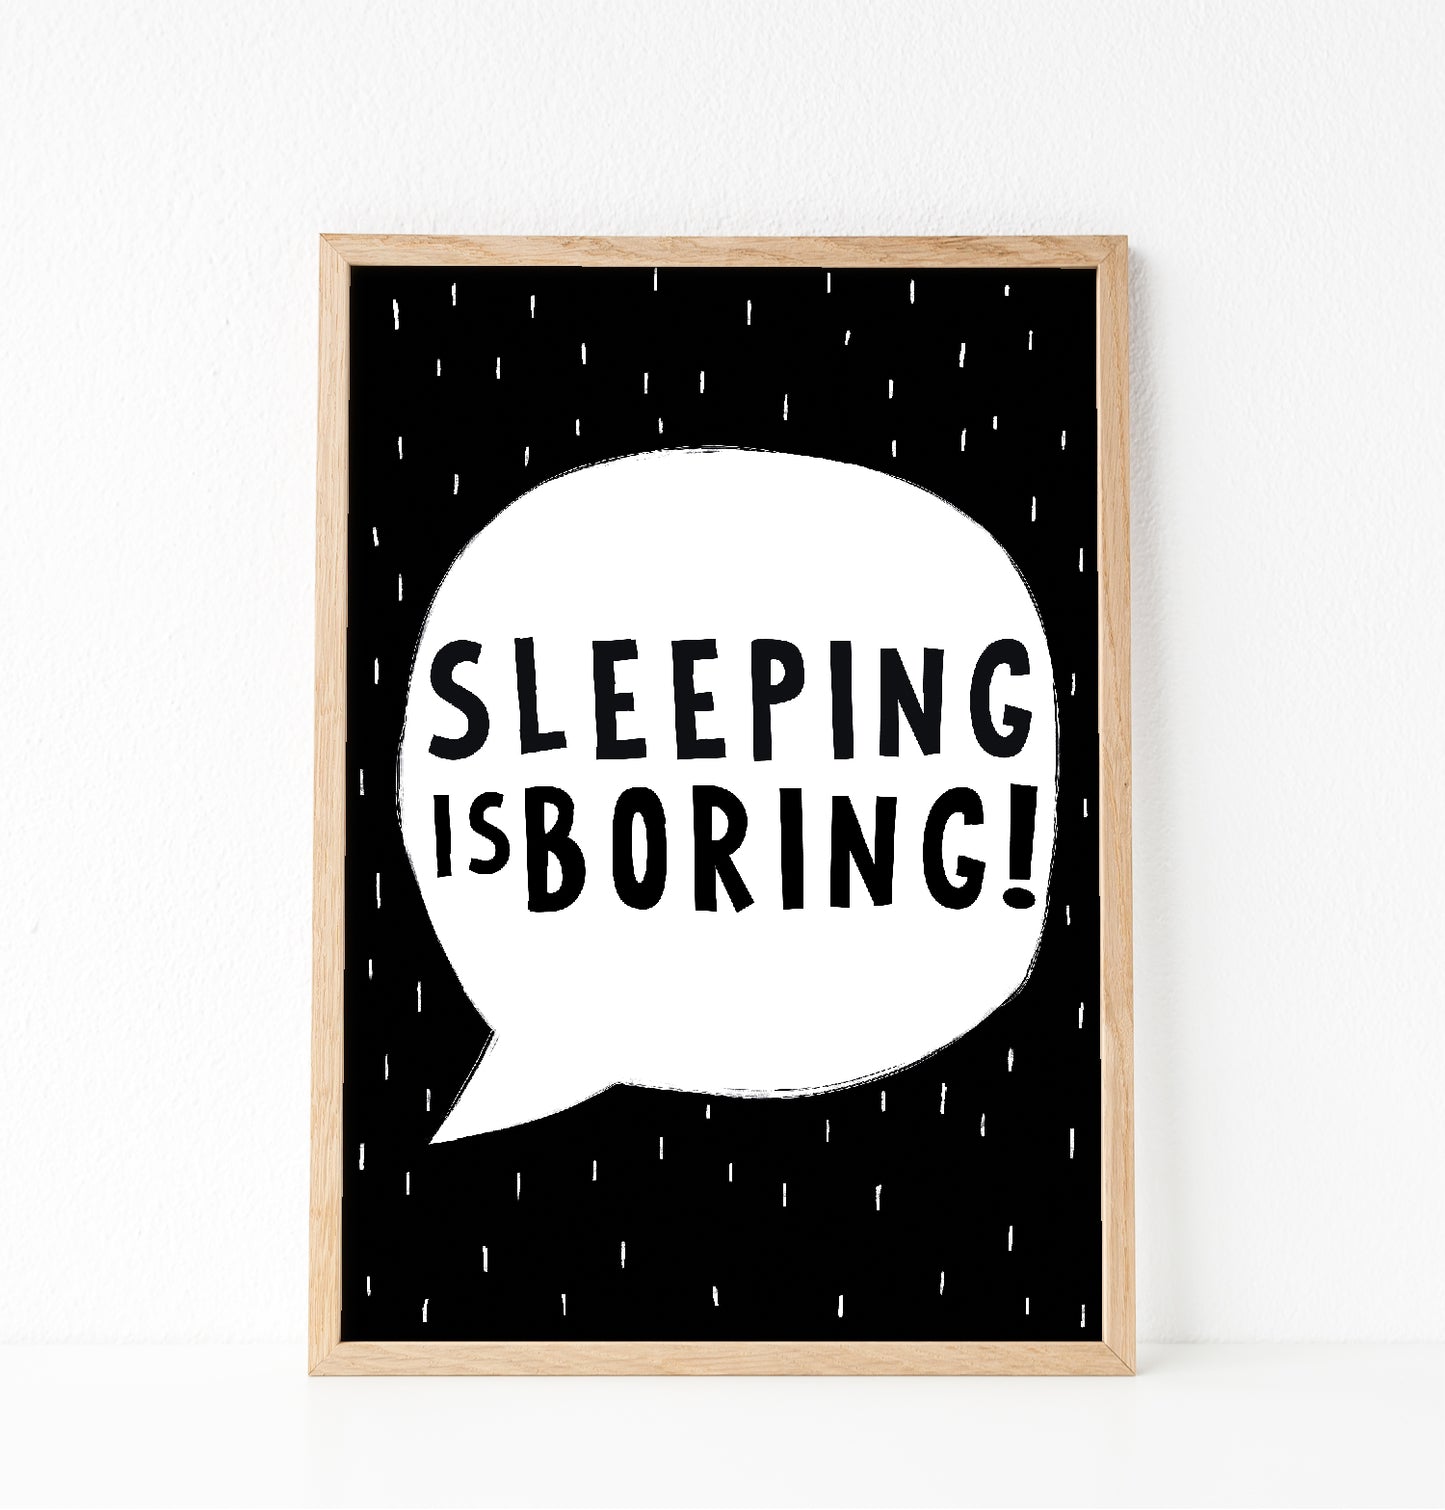 Sleeping is boring quote print